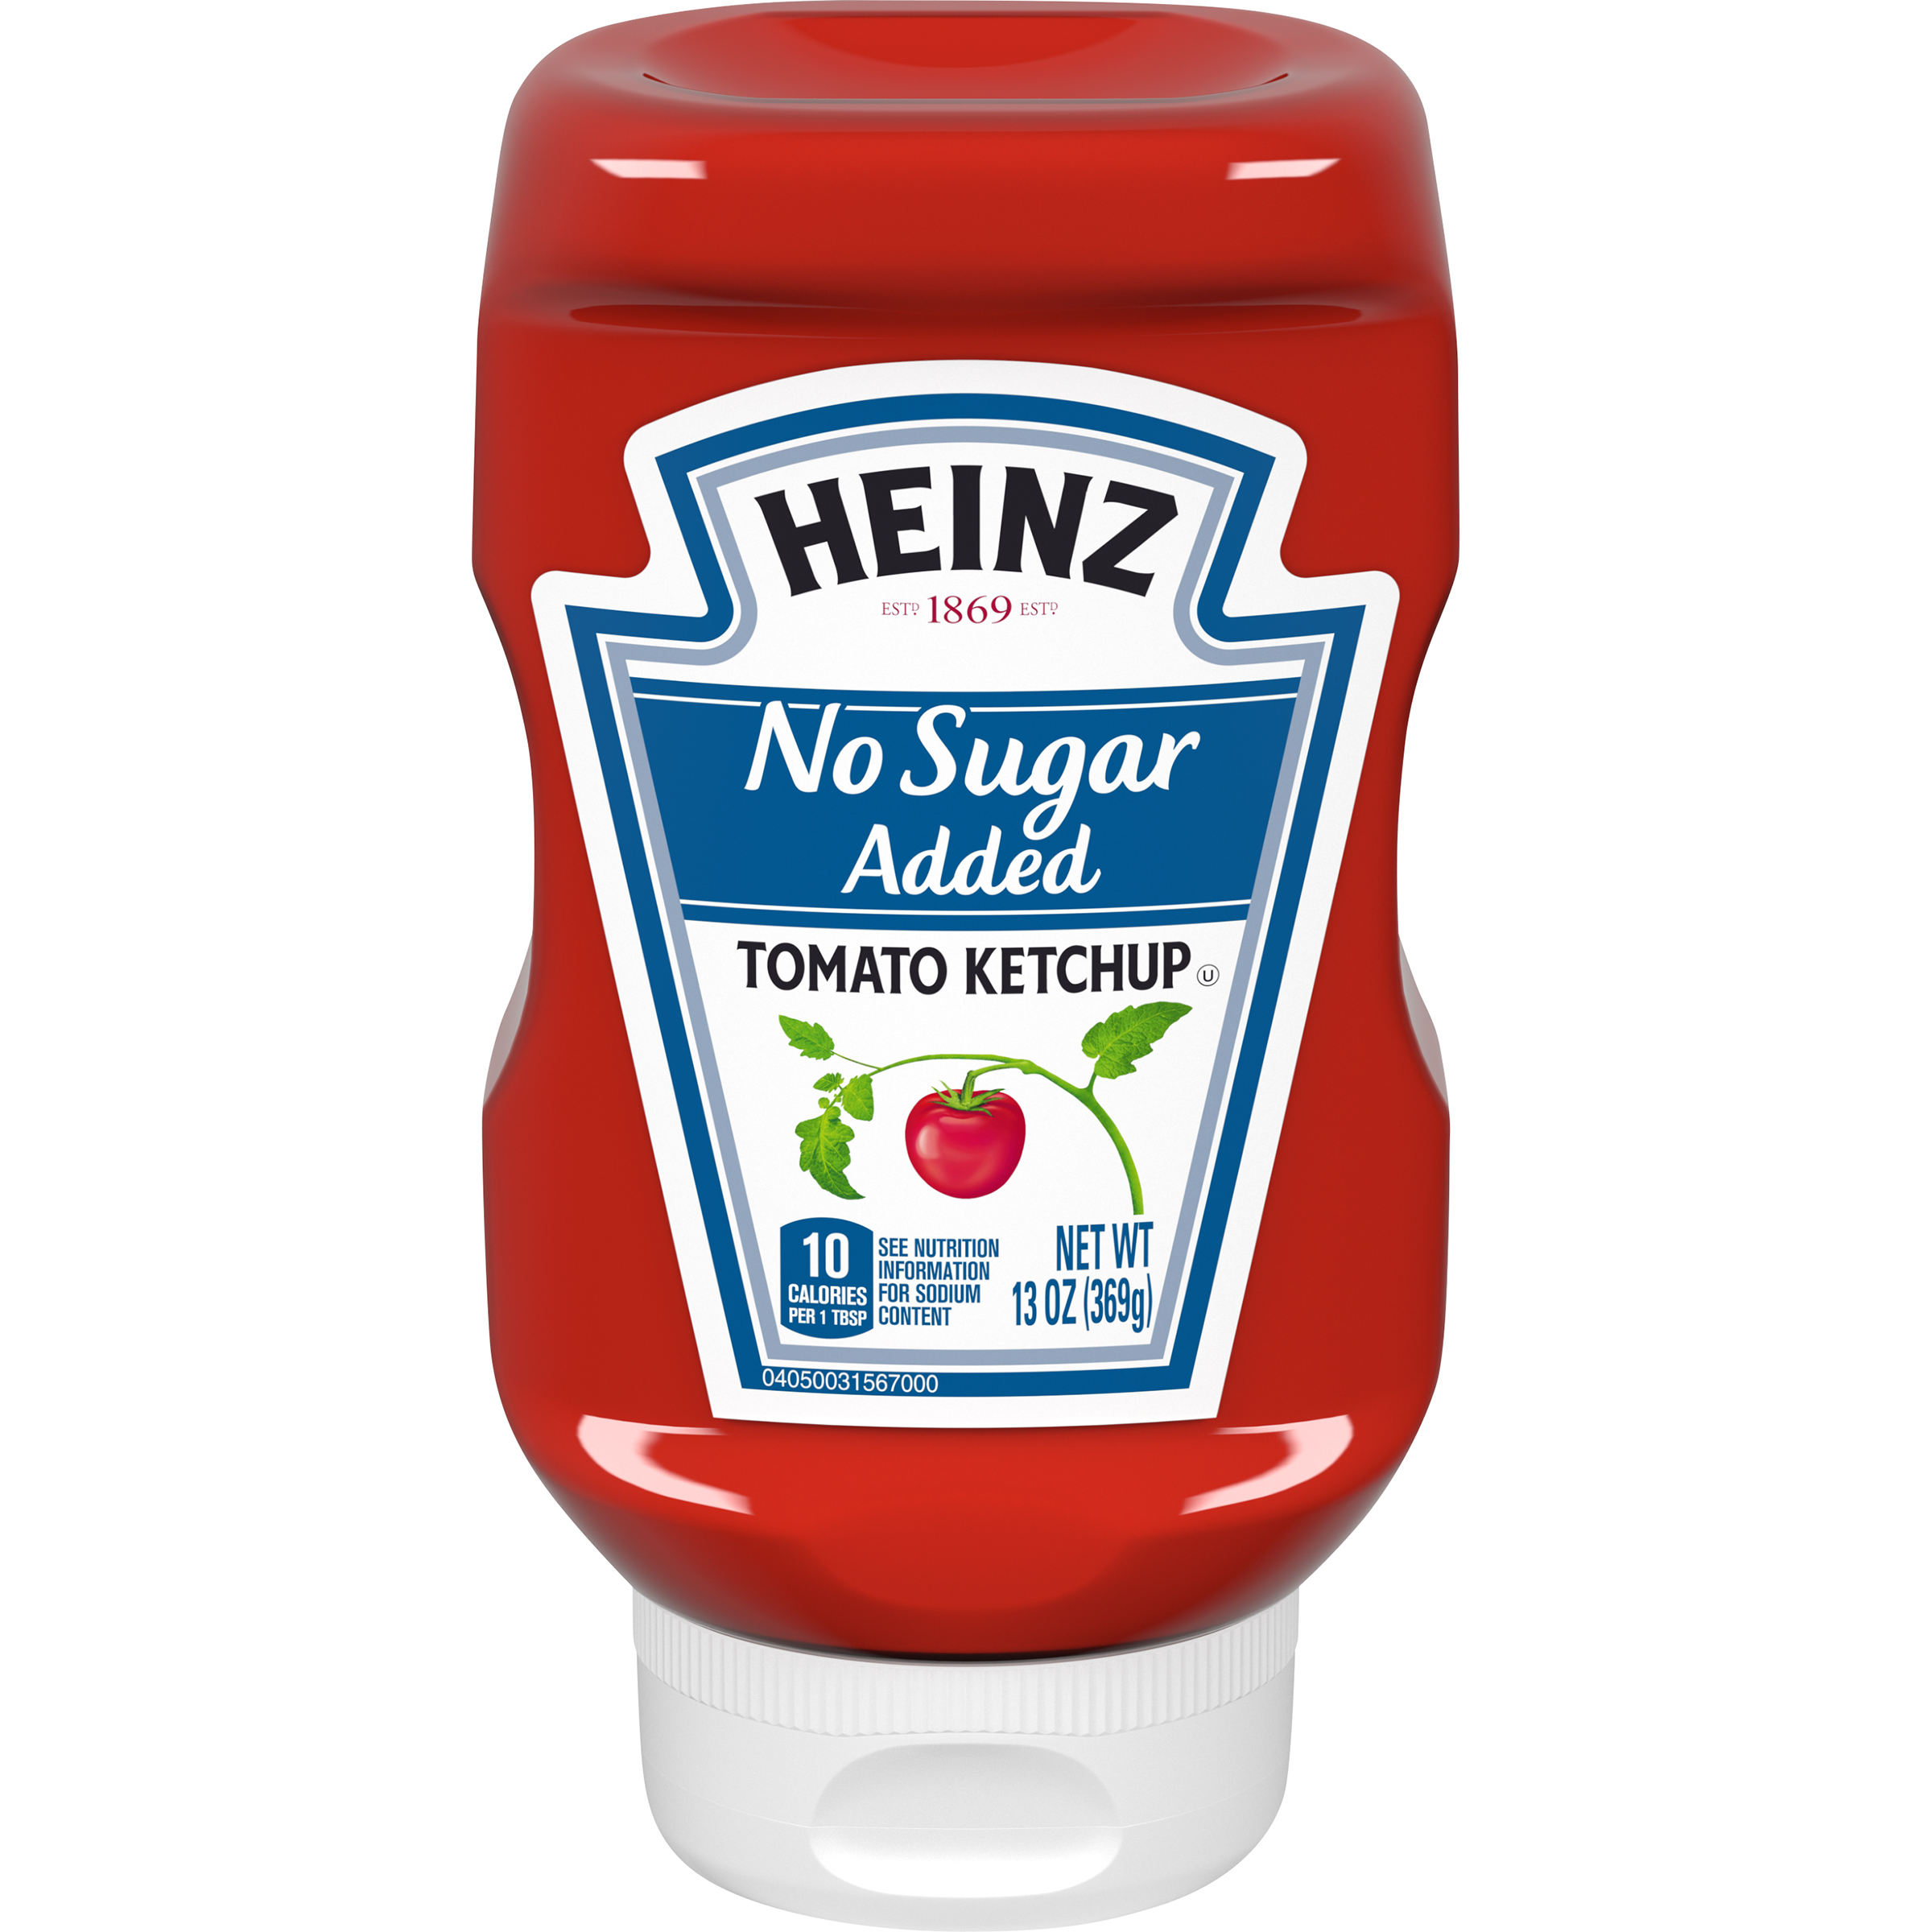 Tomato ketchup. Кетчуп Хайнц без сахара. "Ketchup ""Heinz"" Tomato 570g  ". Heinz кетчуп без сахара. Кетчуп Хайнц no Sugar.